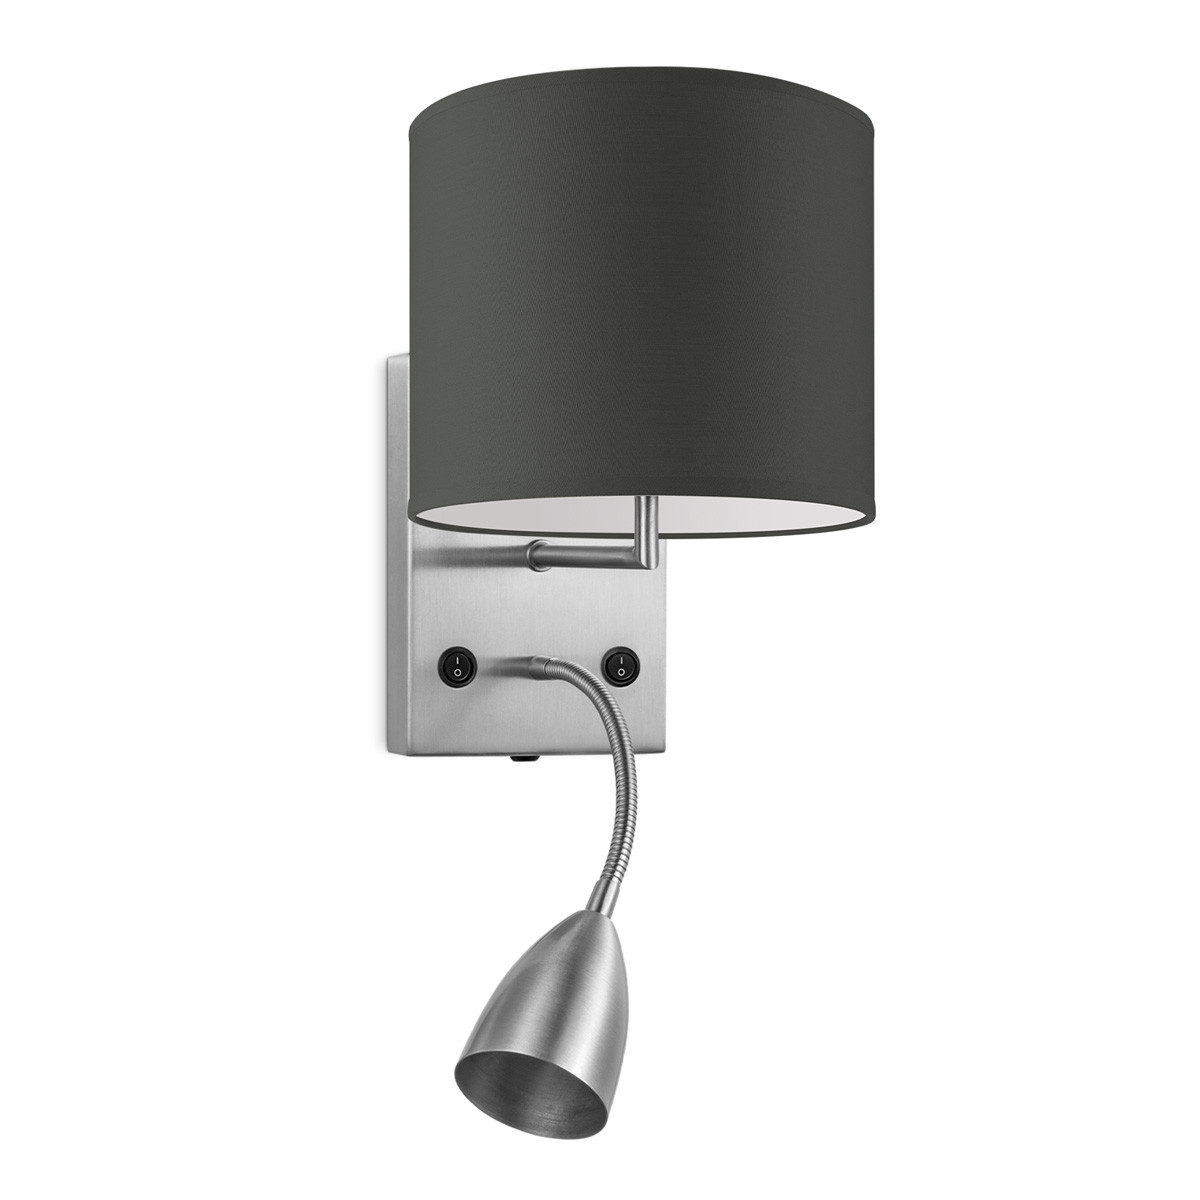 Light depot - wandlamp read bling Ø 20 cm - antraciet - Outlet